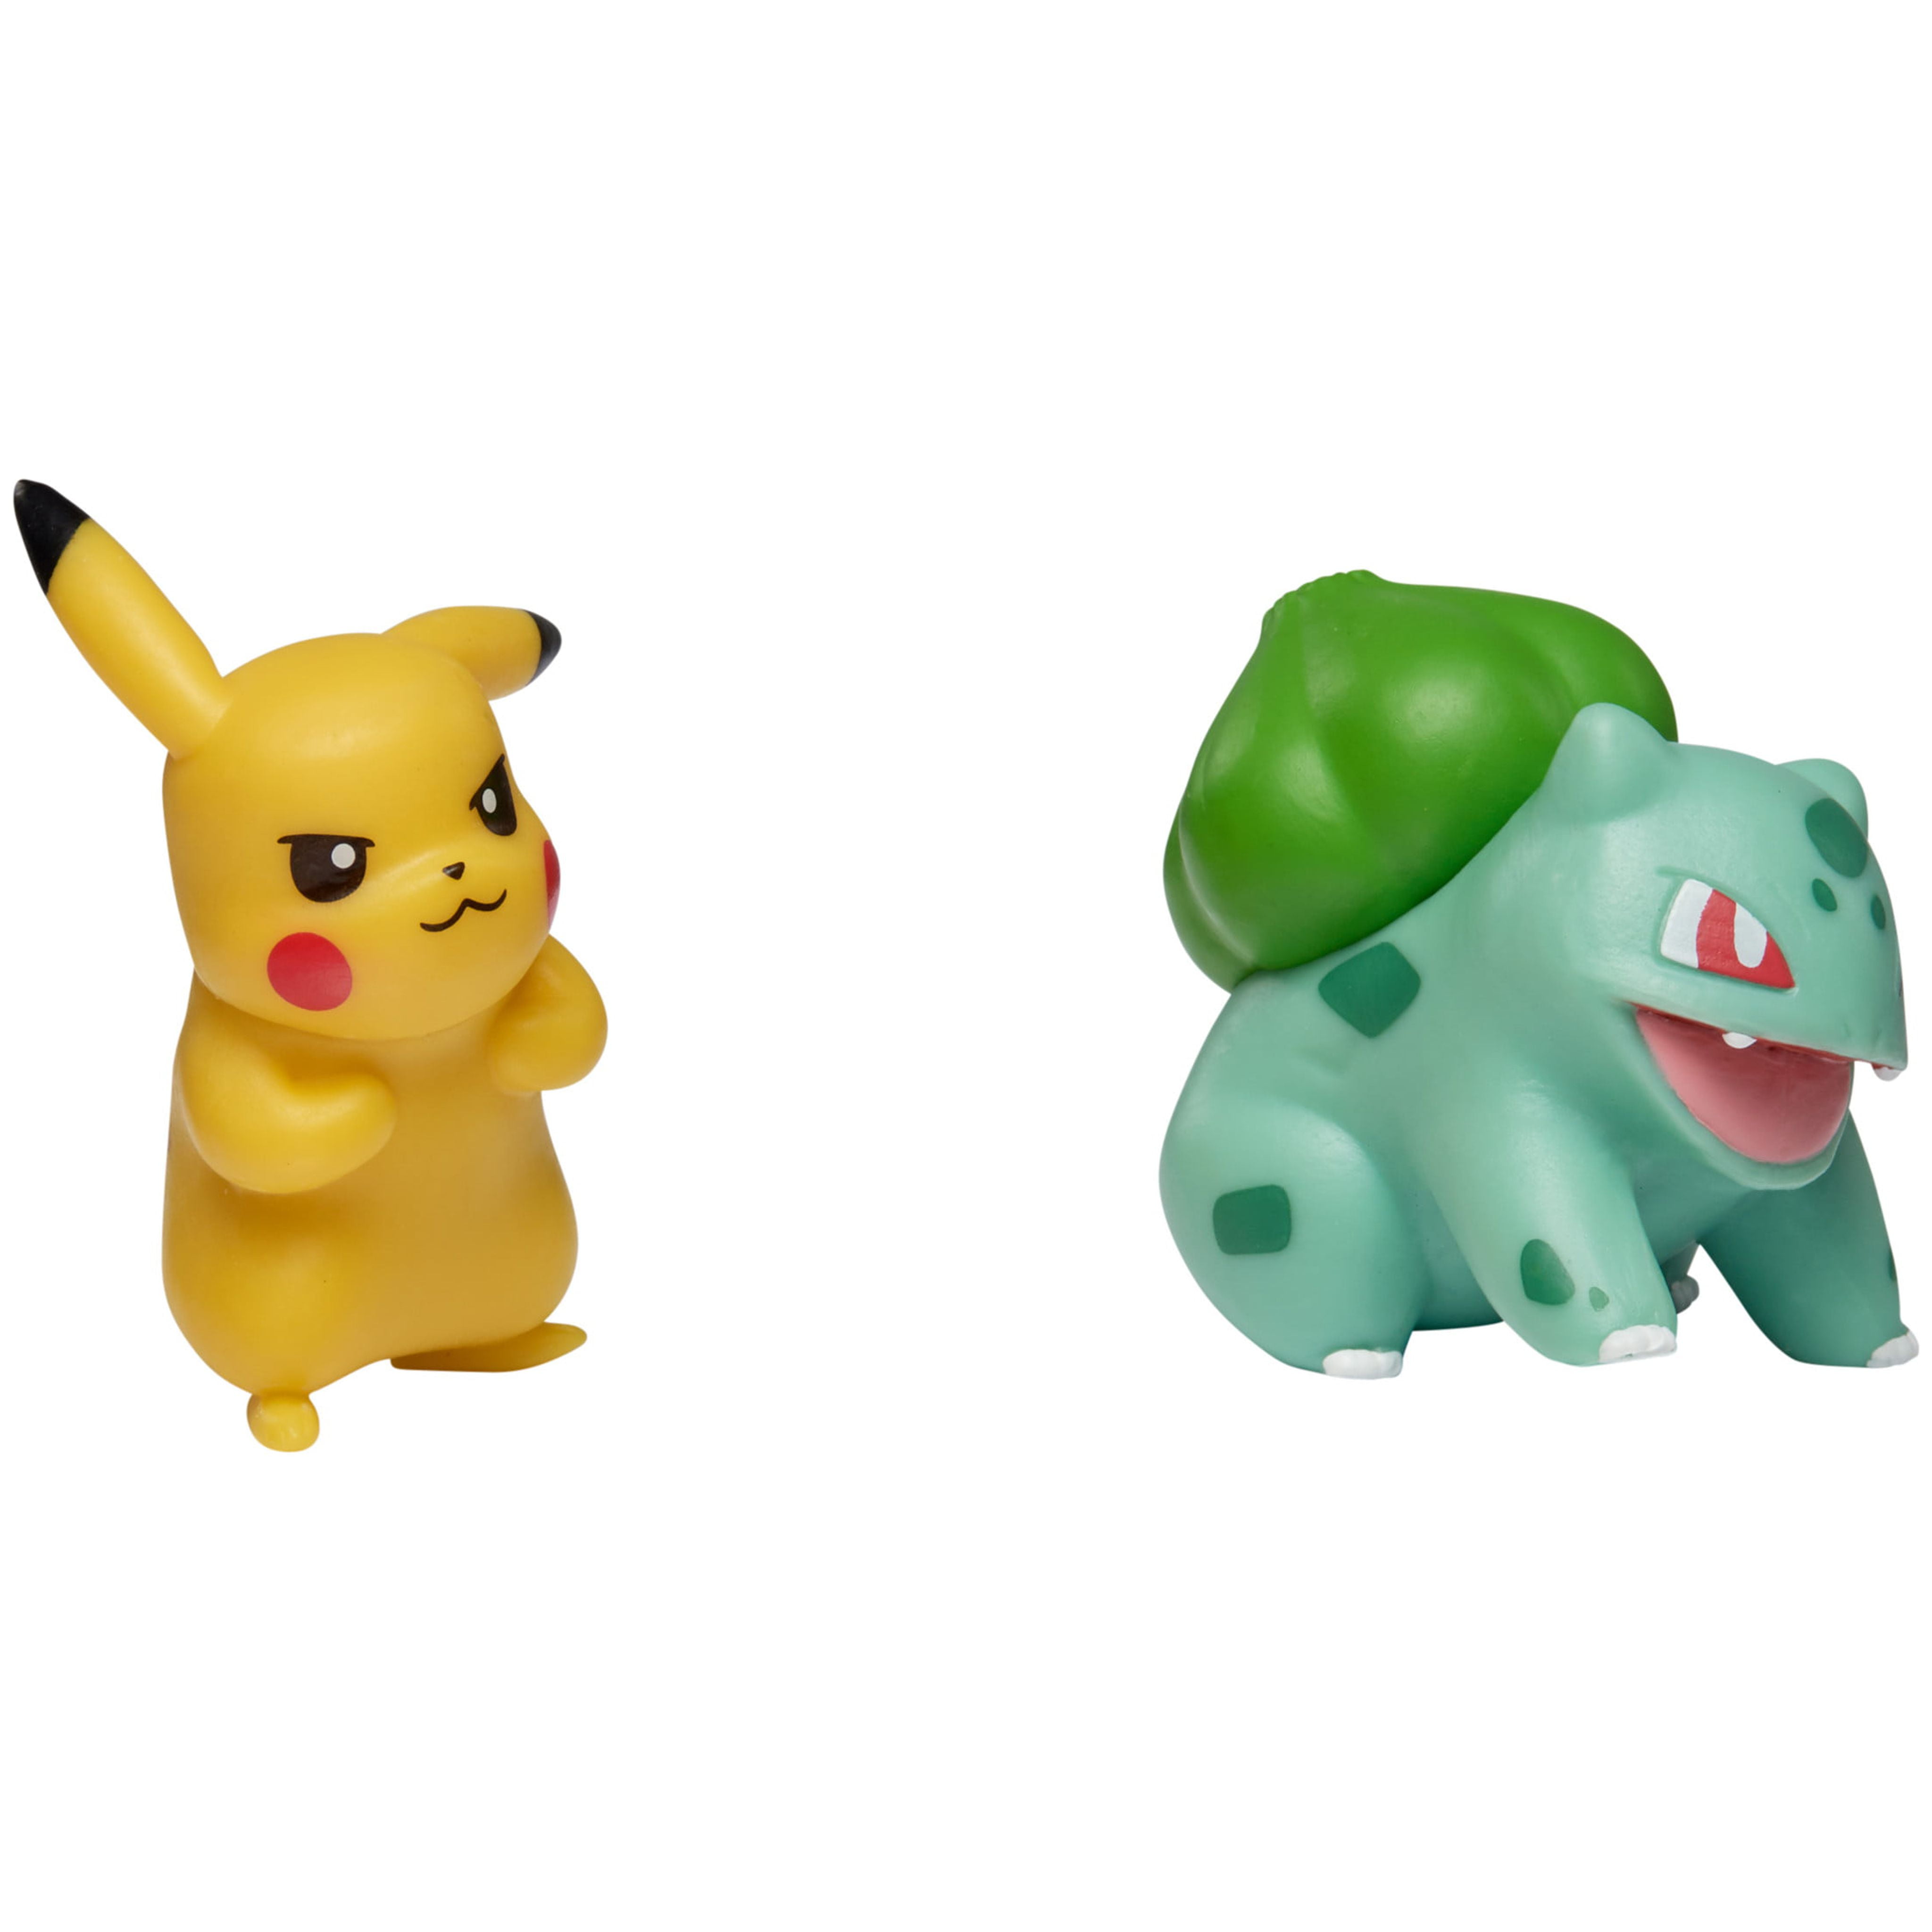 Pikachu Gift for Friend Shadowbox Pokemon Battle Bulbasaur 